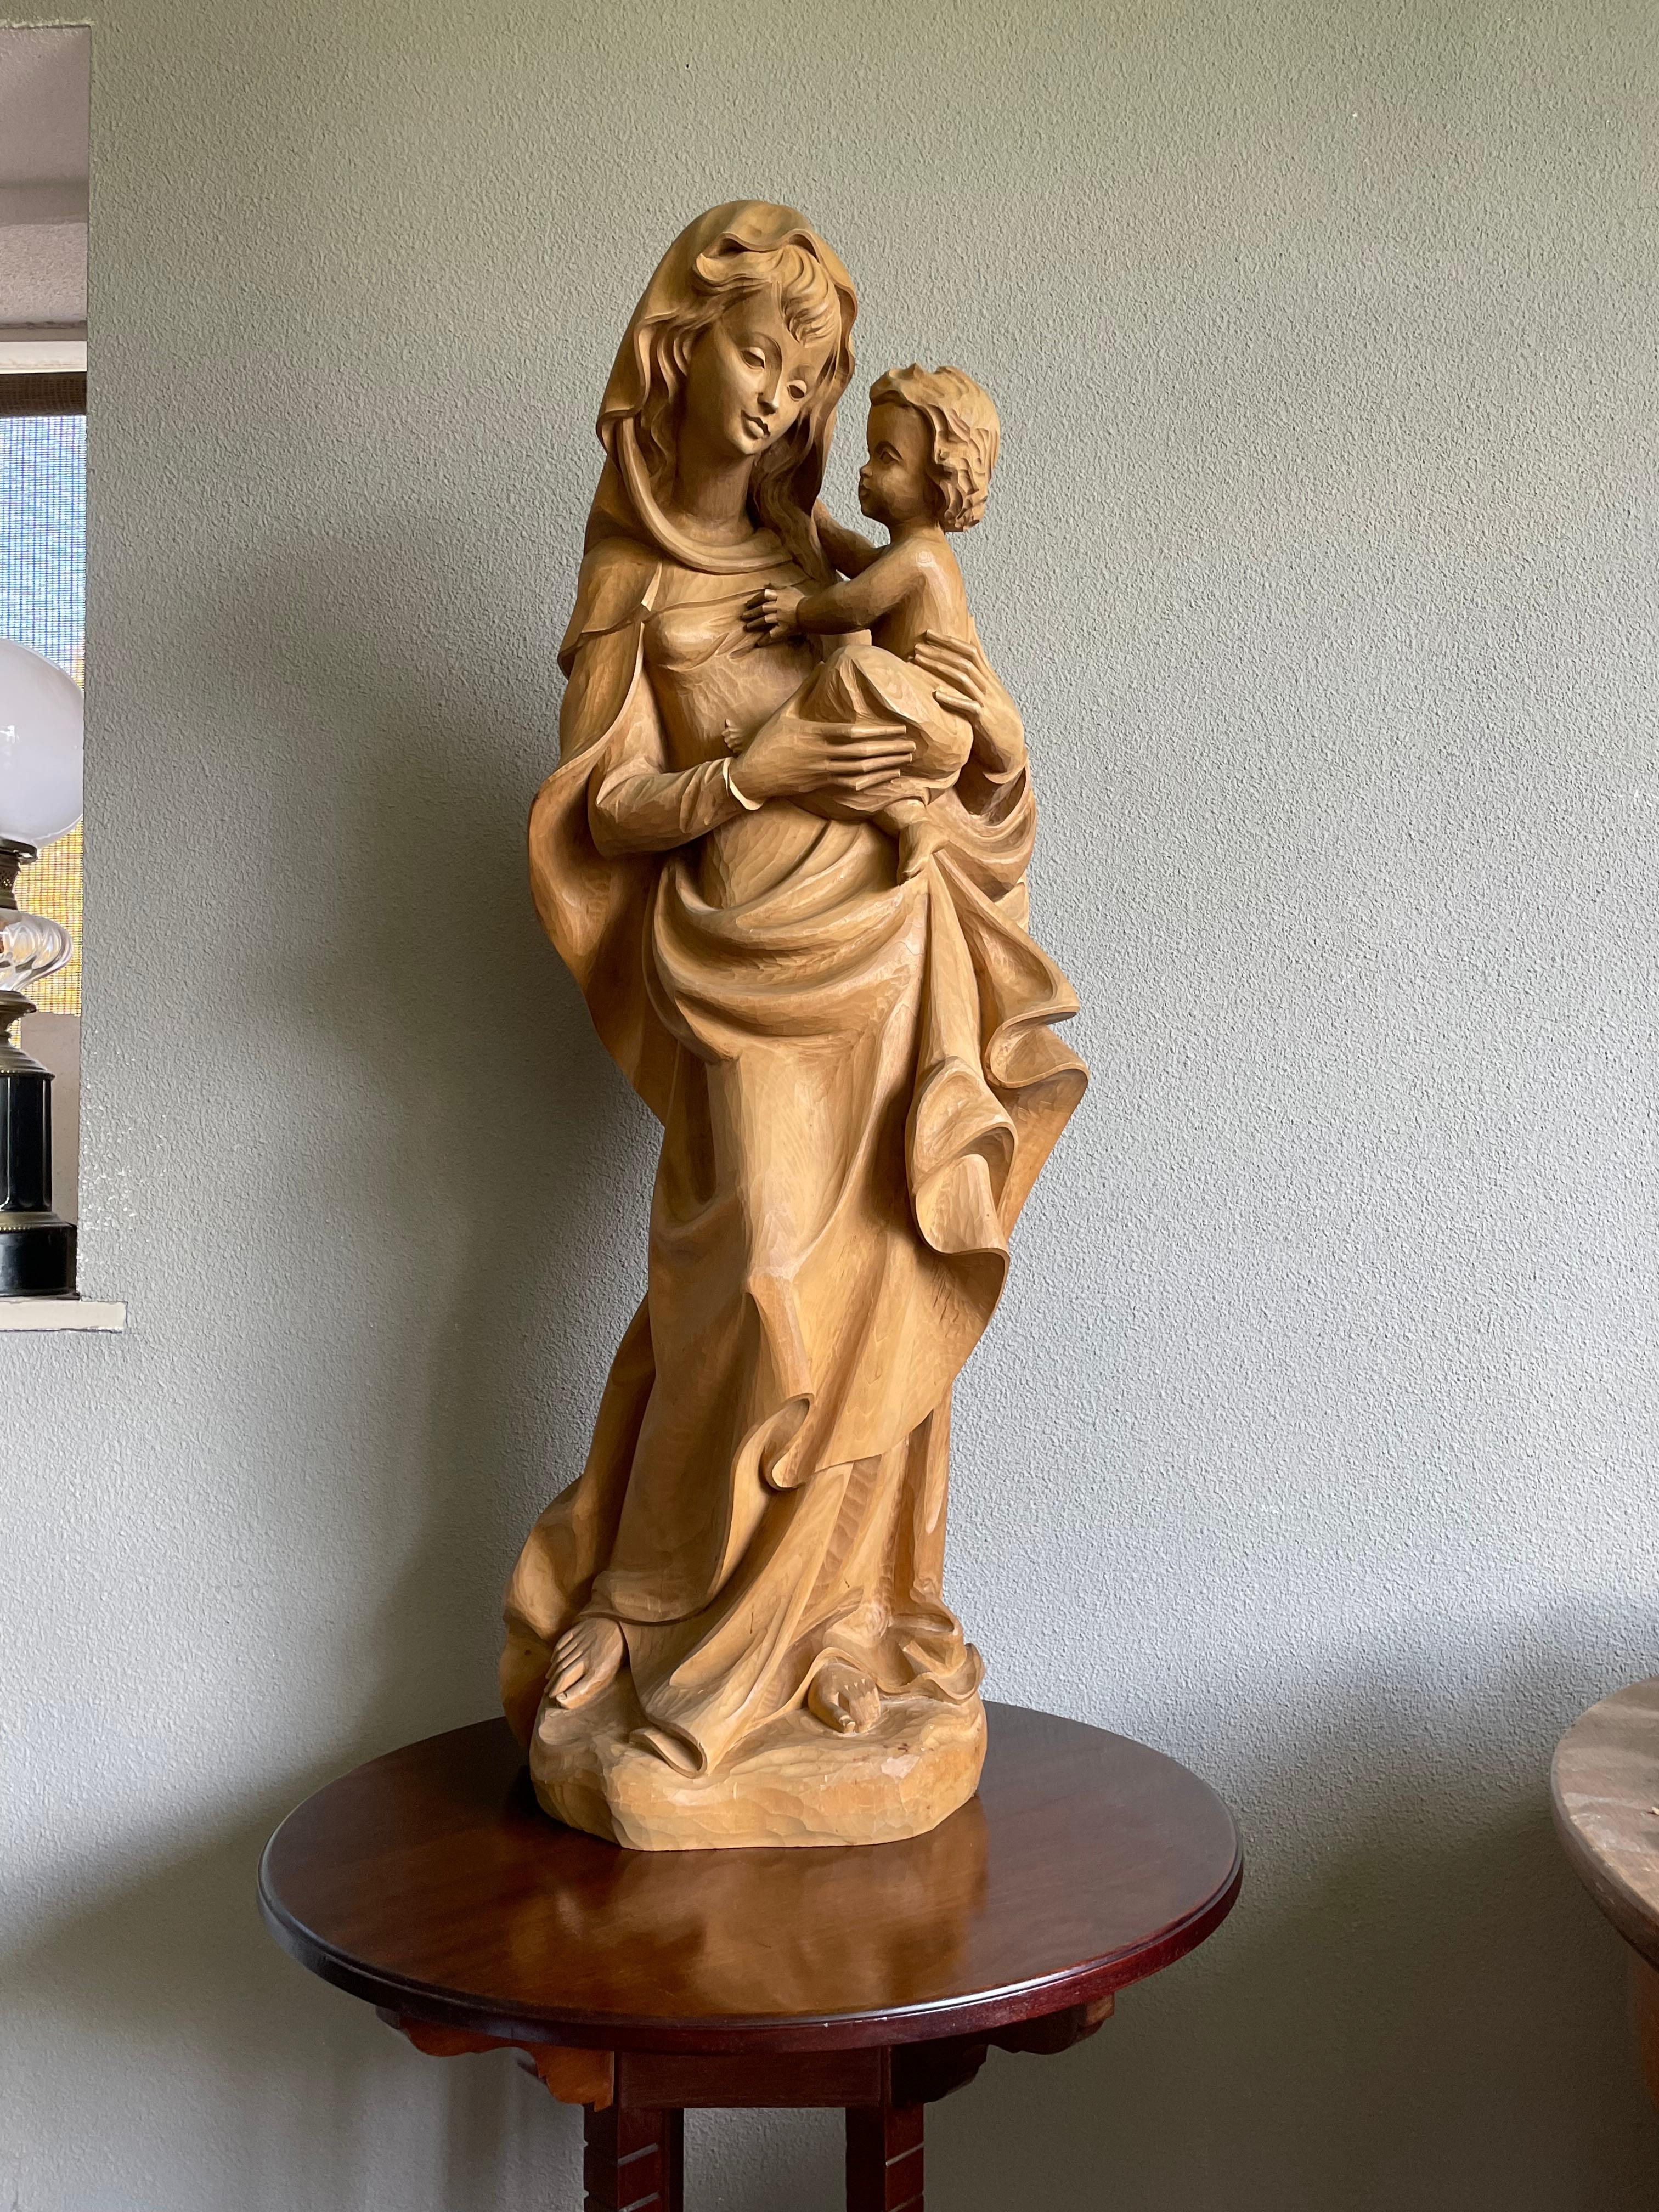 European Large Jugendstil Style Hand Carved Wooden Sculpture of Mary and Child Jesus For Sale